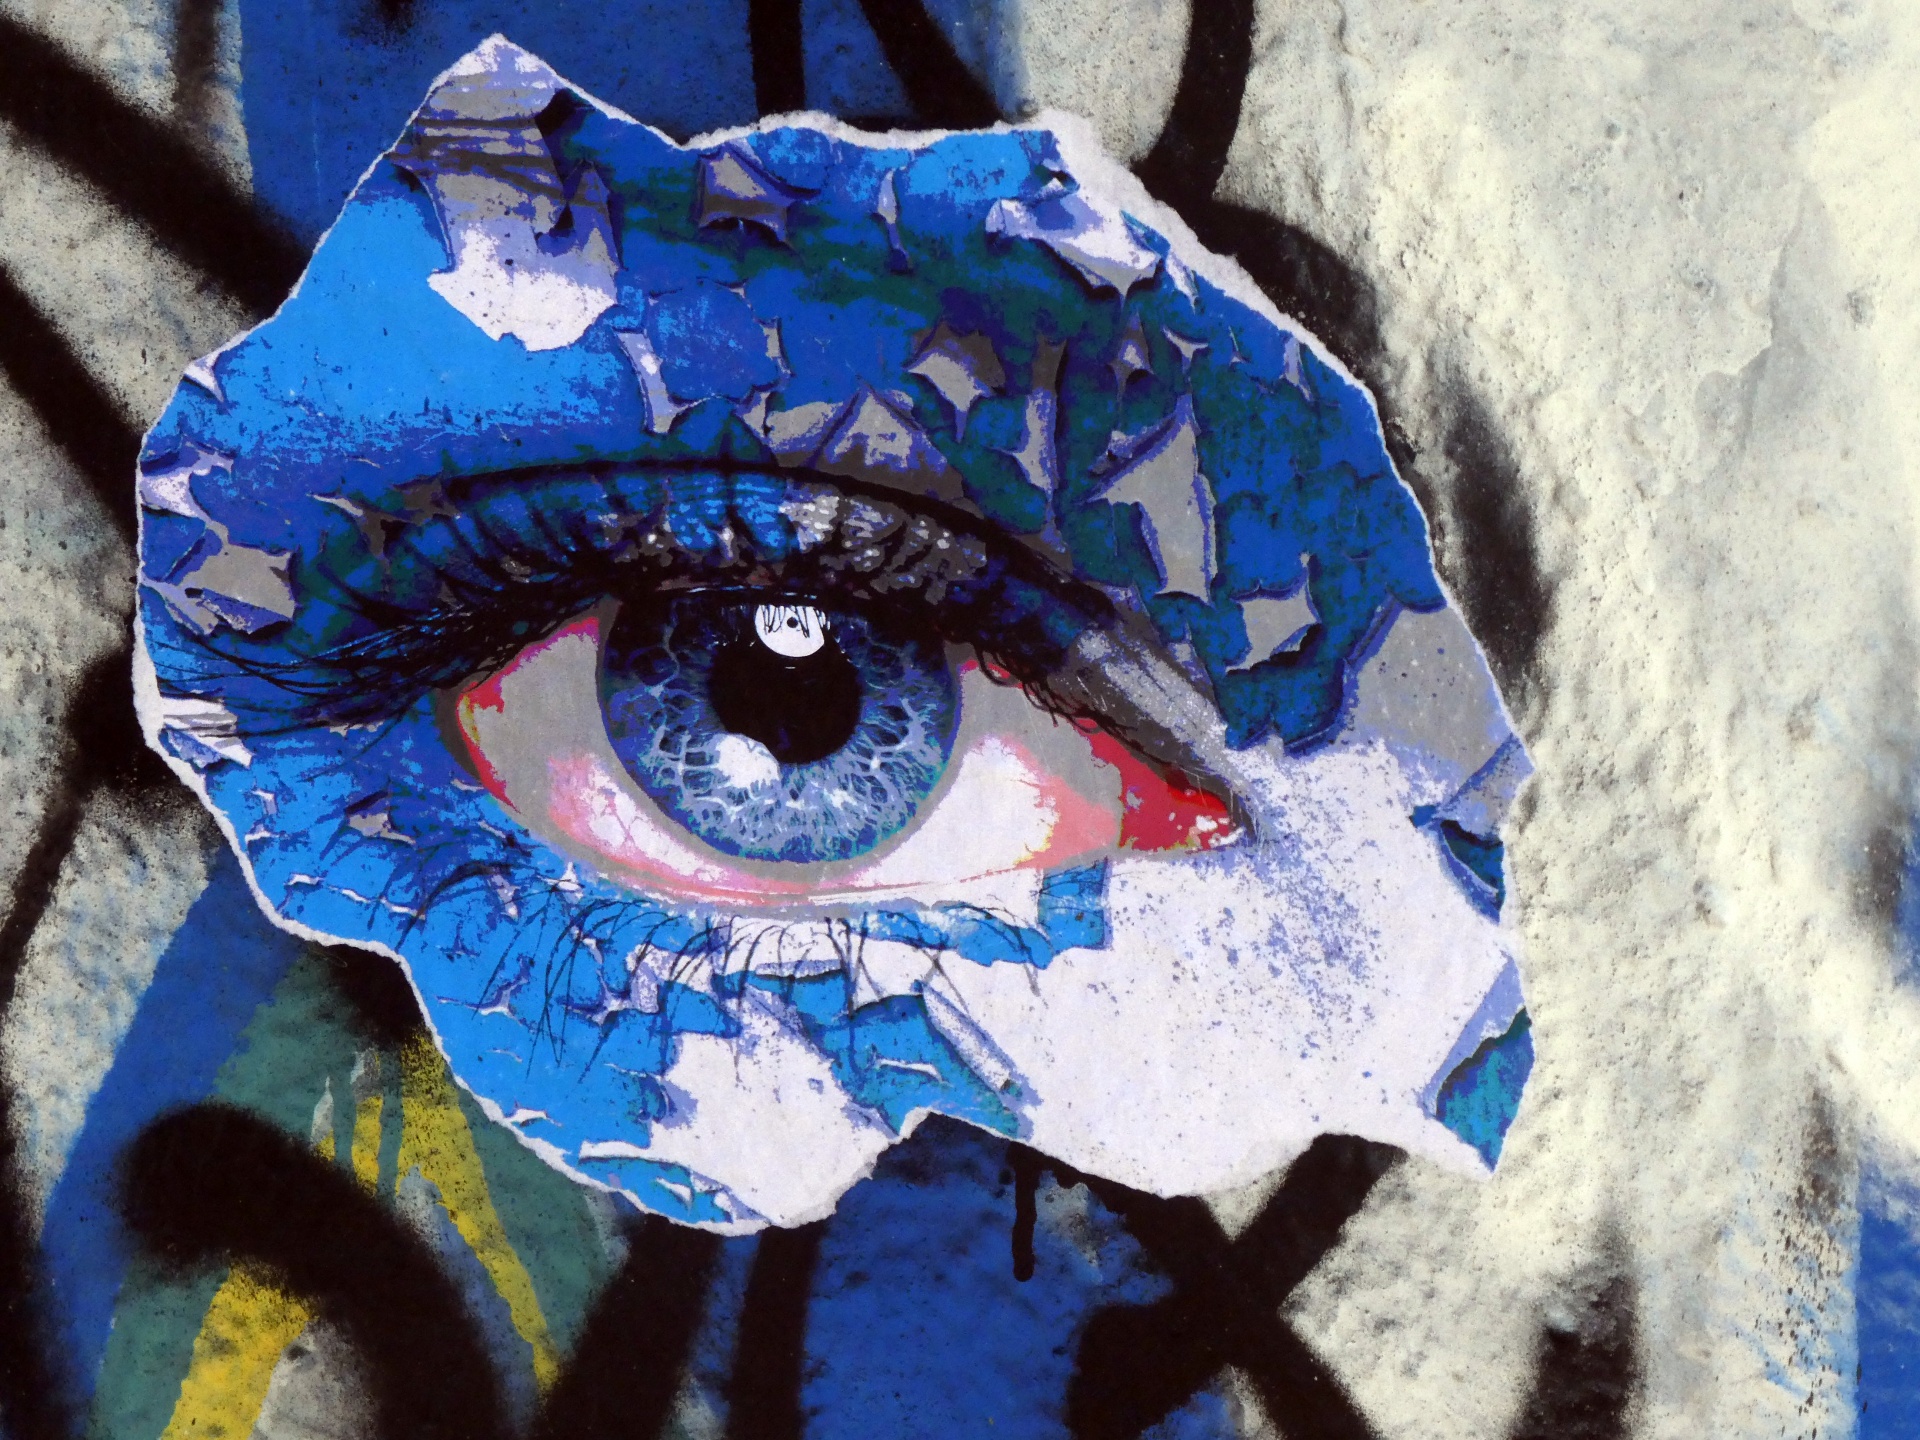 Graffiti Eye